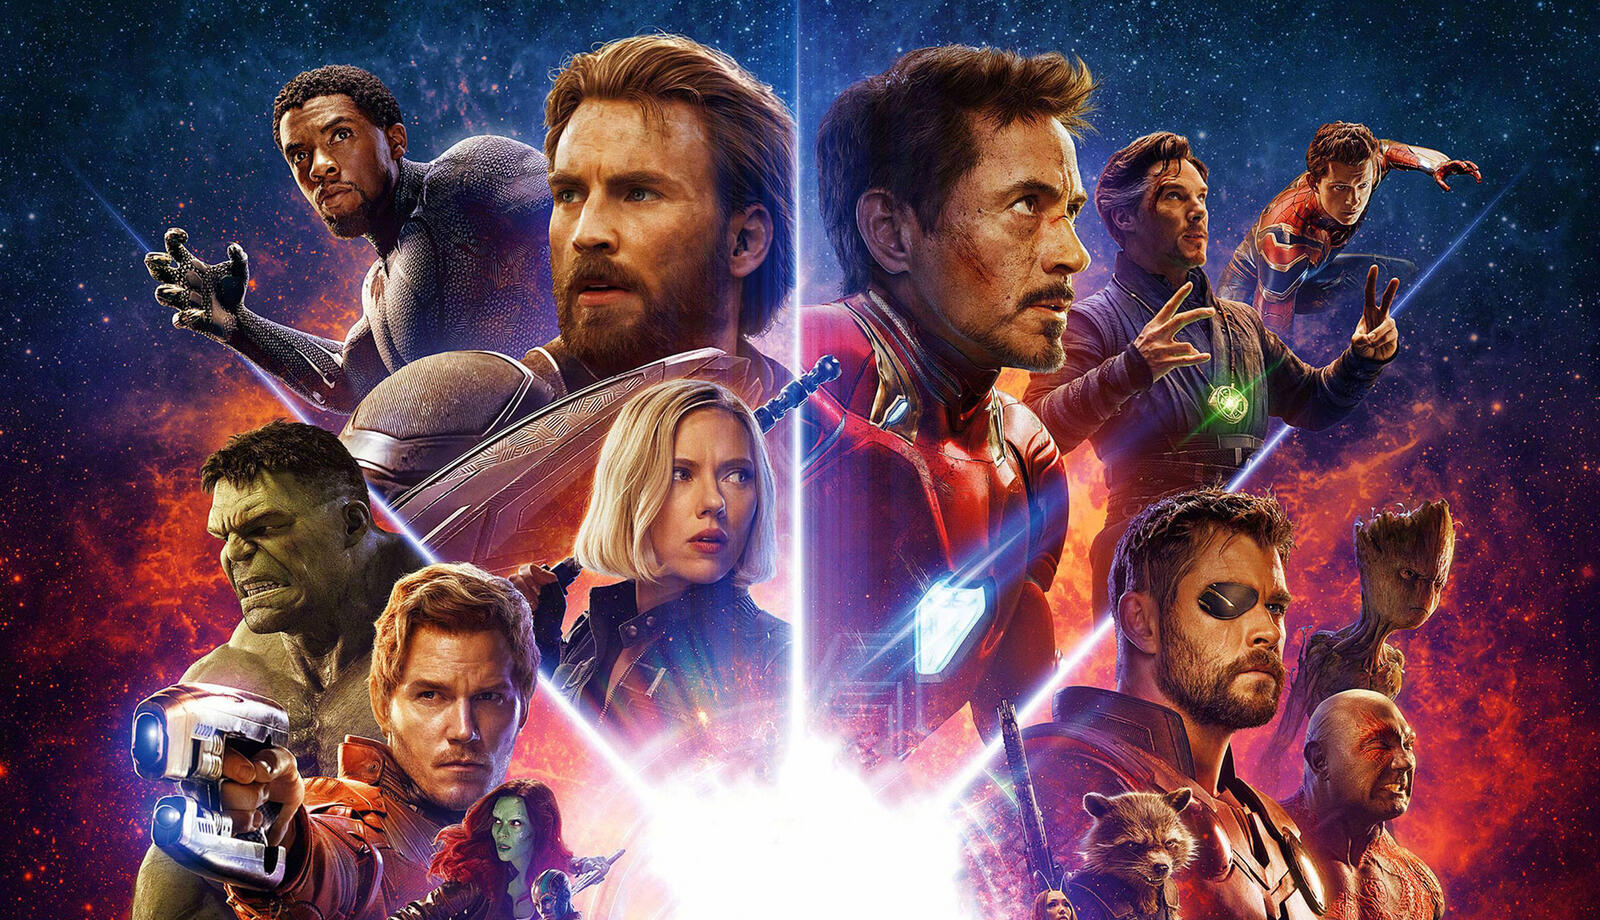 Wallpapers playbill 2018 movies avengers infinity war on the desktop